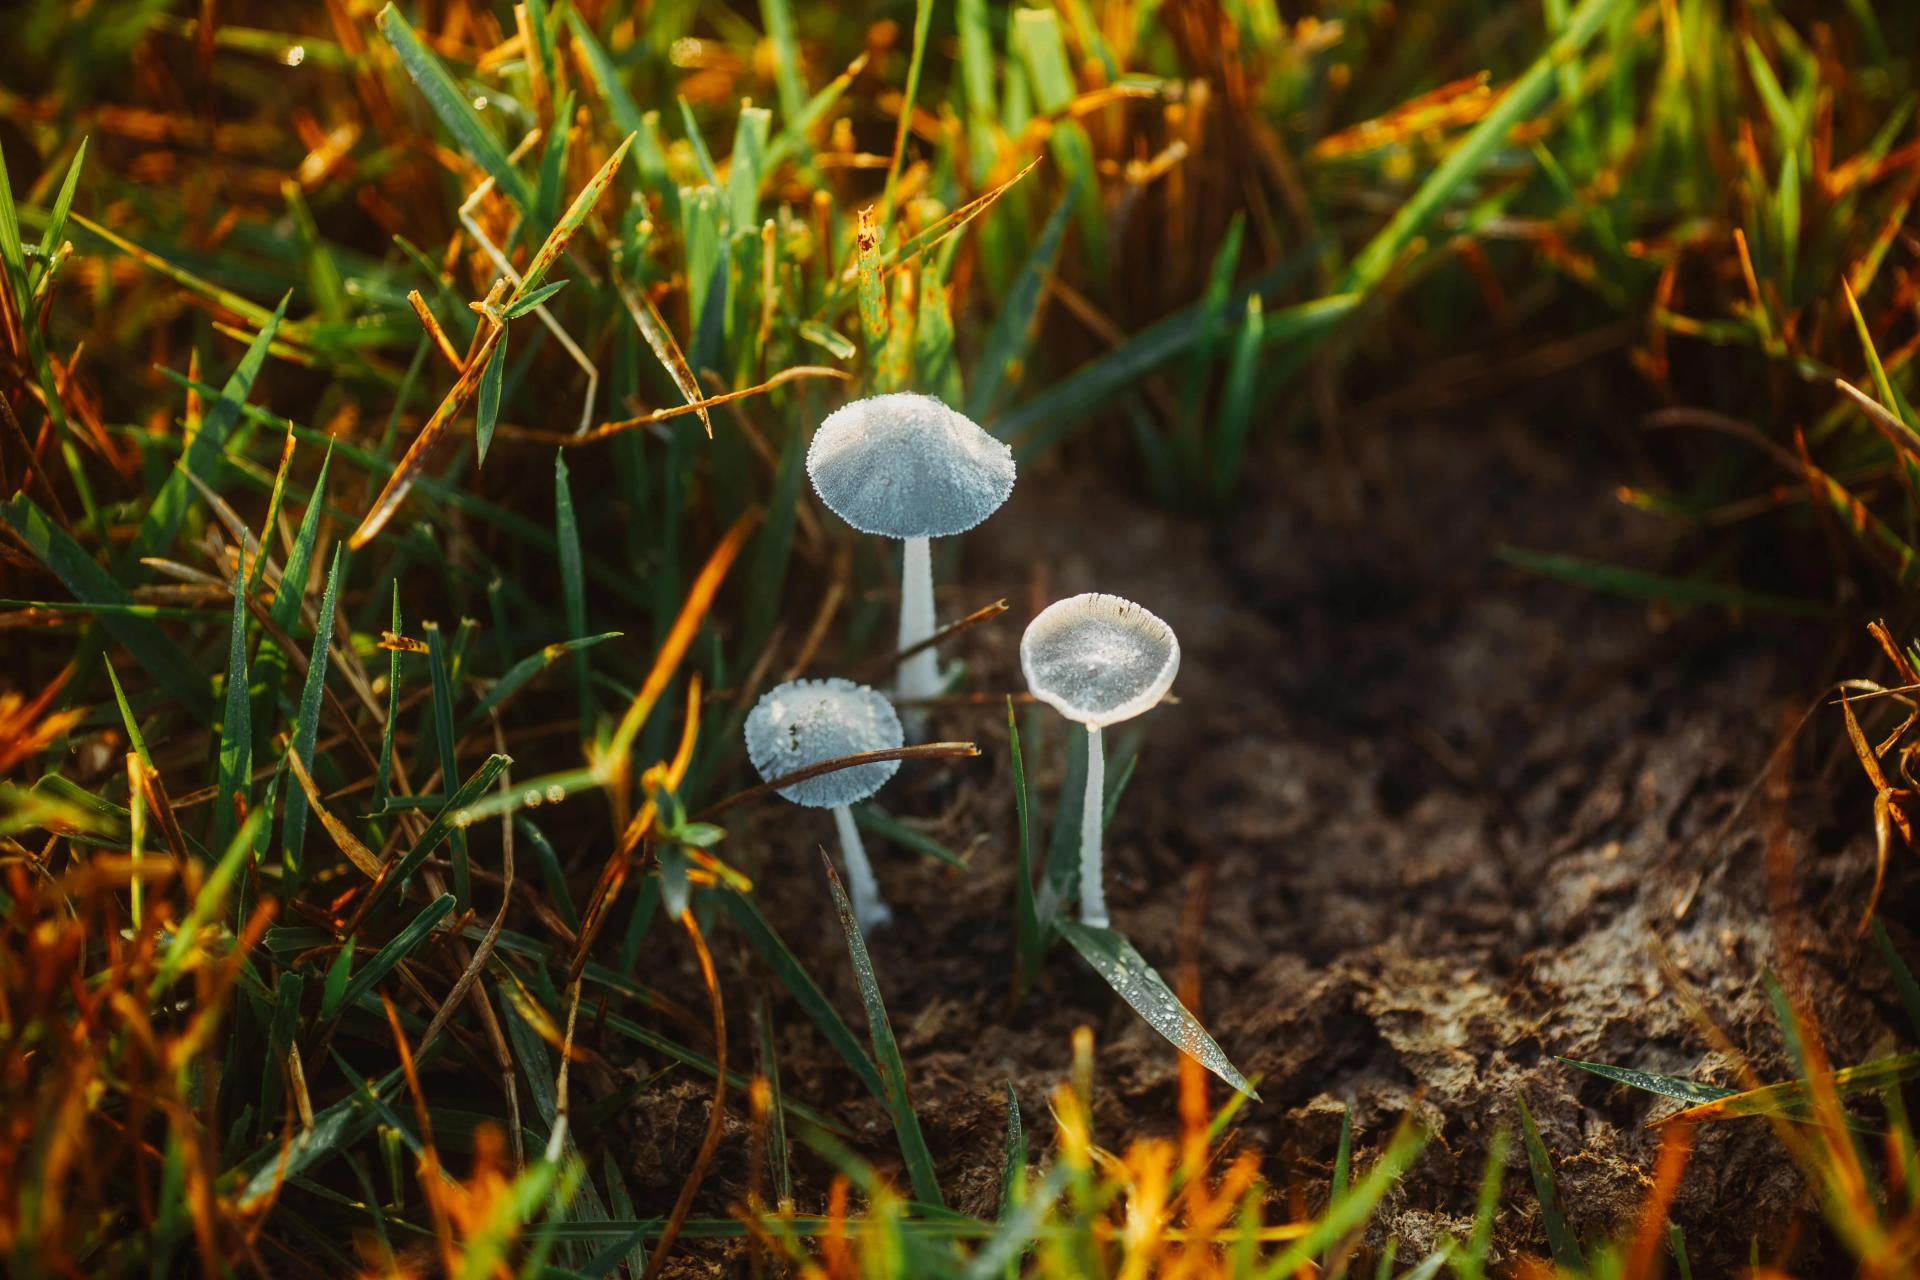 Tiny Mushrooms Growing in the Garden